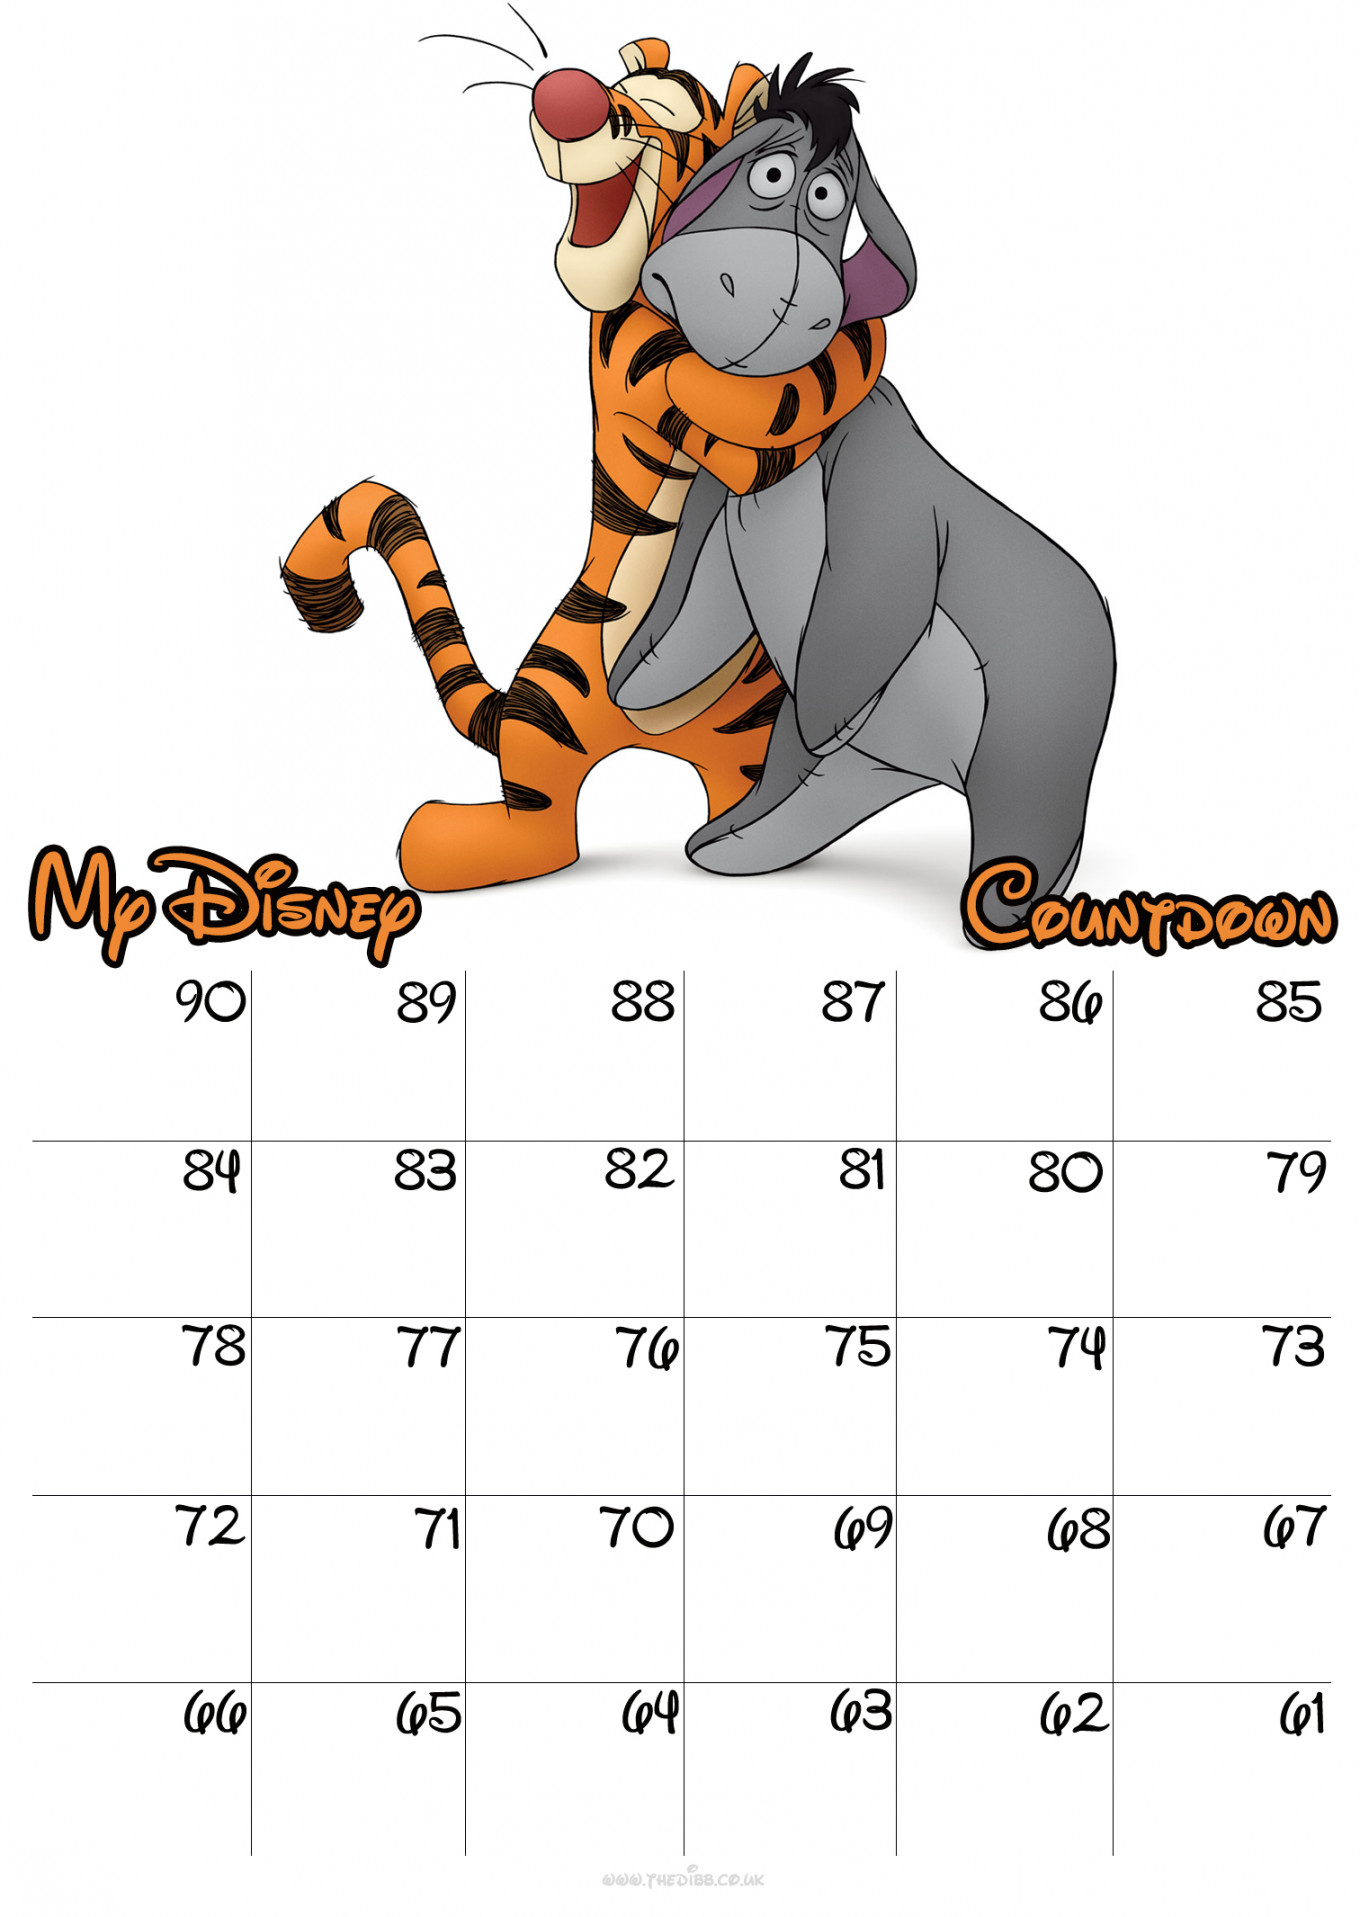 Day Disney Countdown Calendars - theDIBB